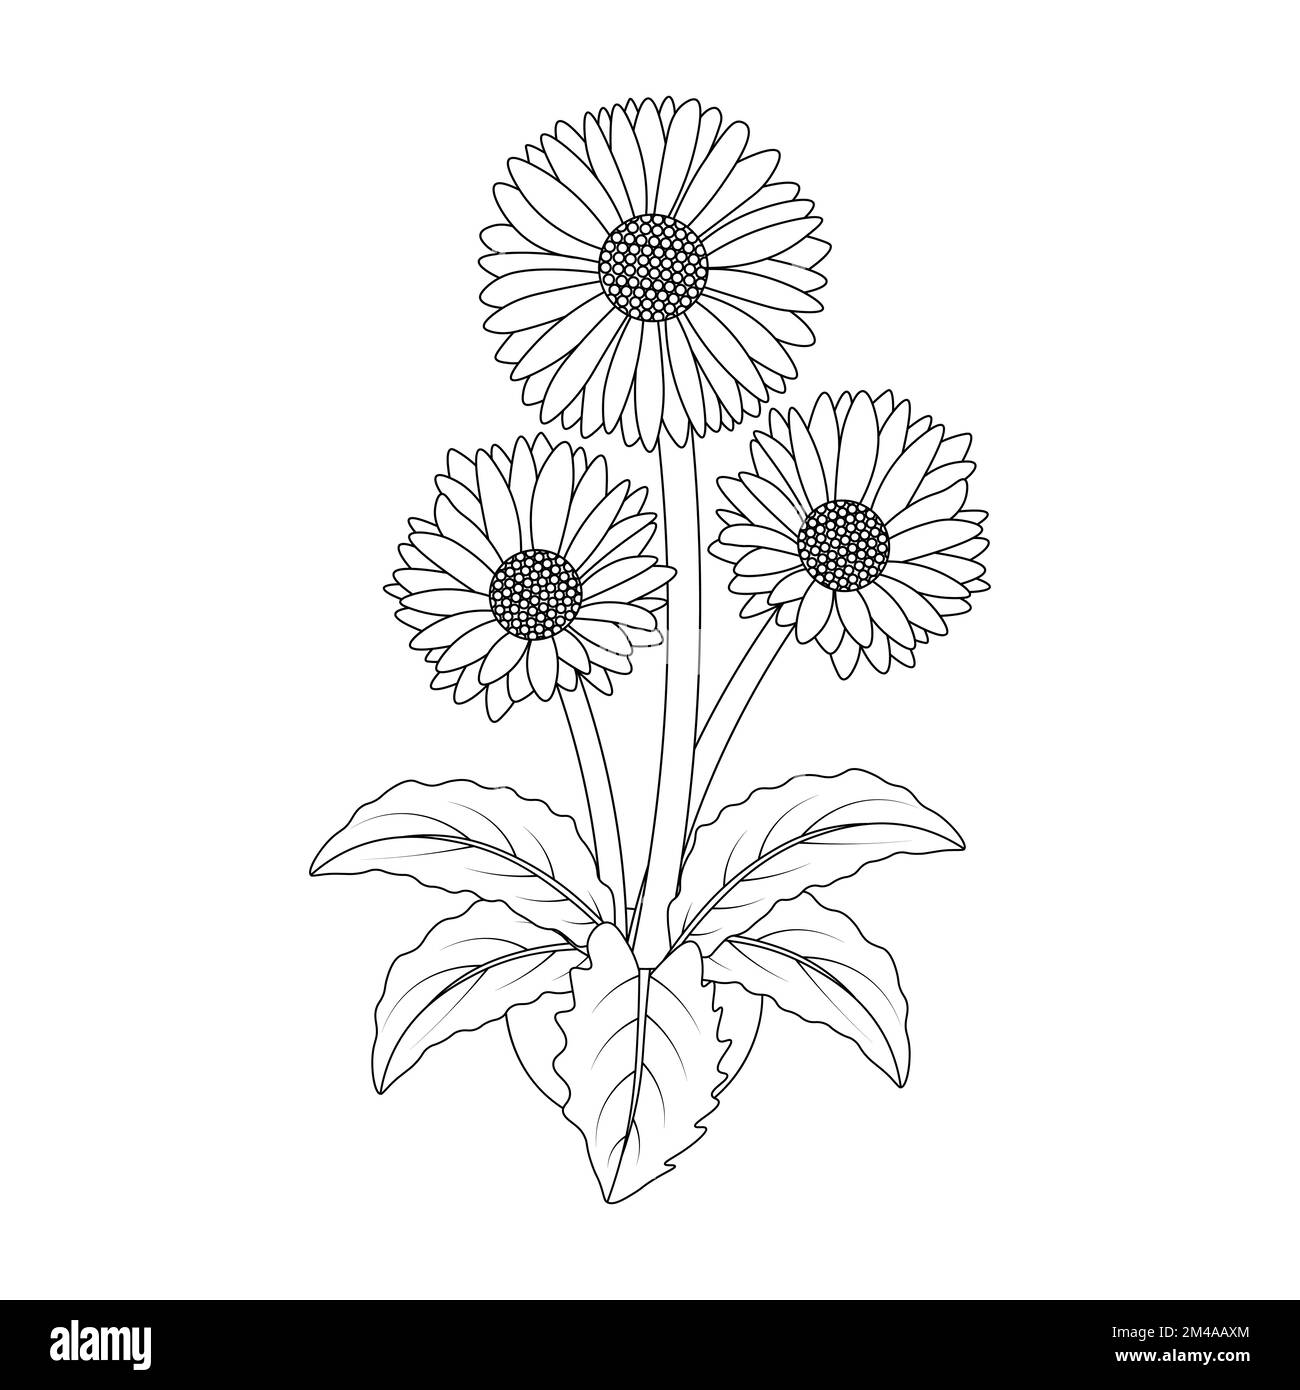 How to Draw a Daisy Flower - A Realistic Daisy Drawing Tutorial-saigonsouth.com.vn